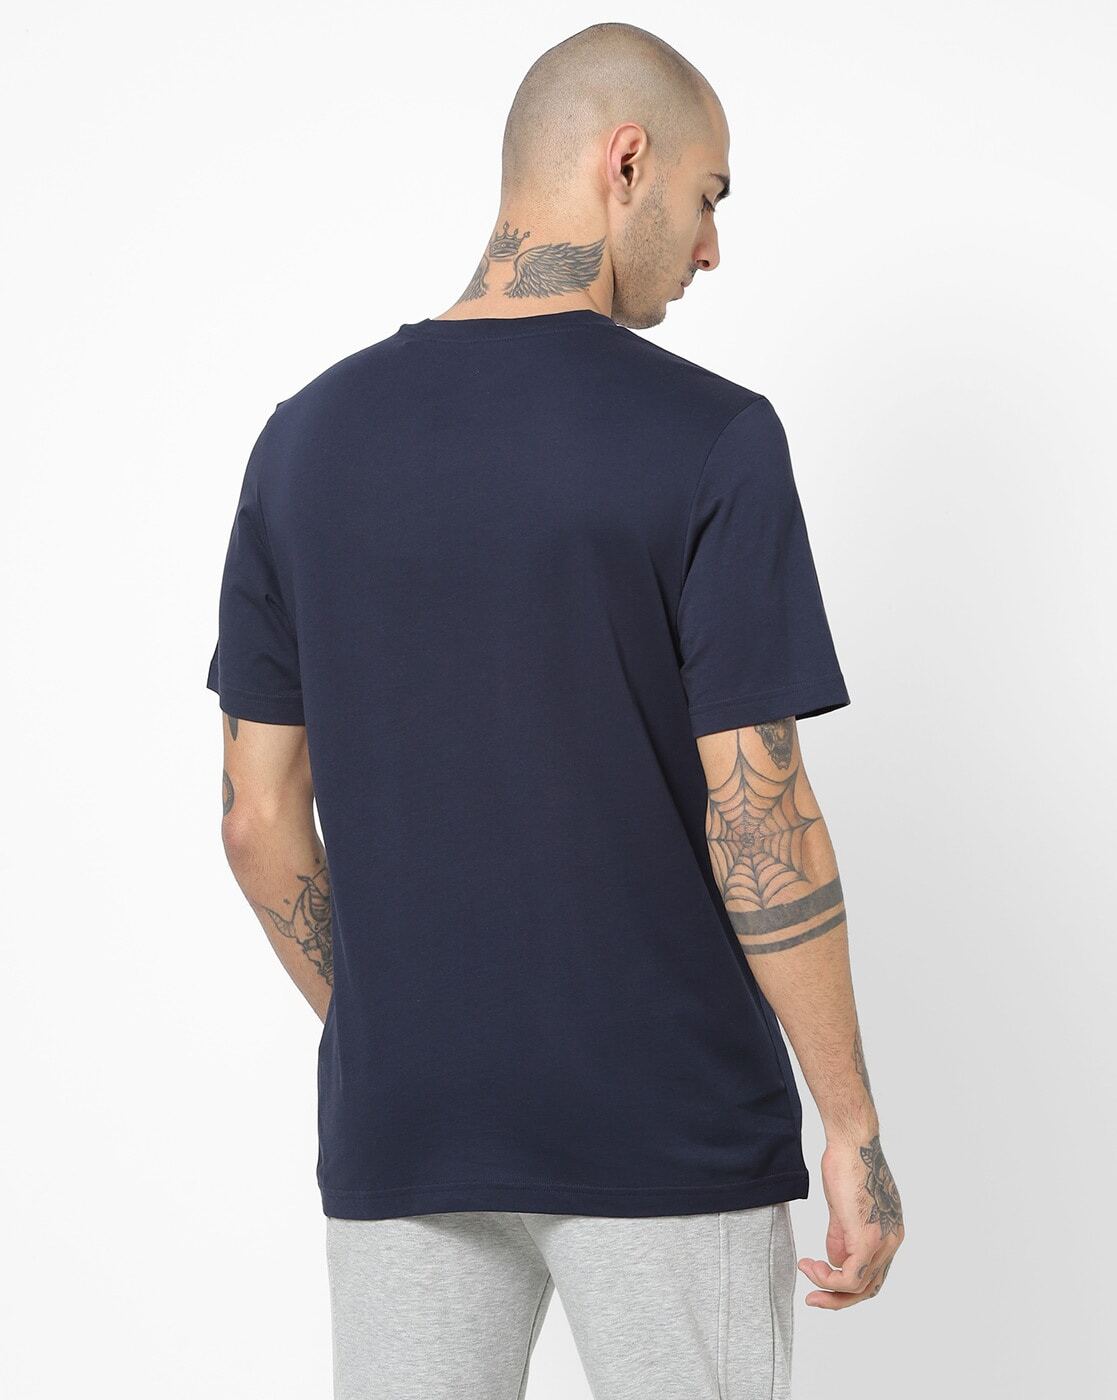 Crew-Neck T-shirt with Branding-Hb0806